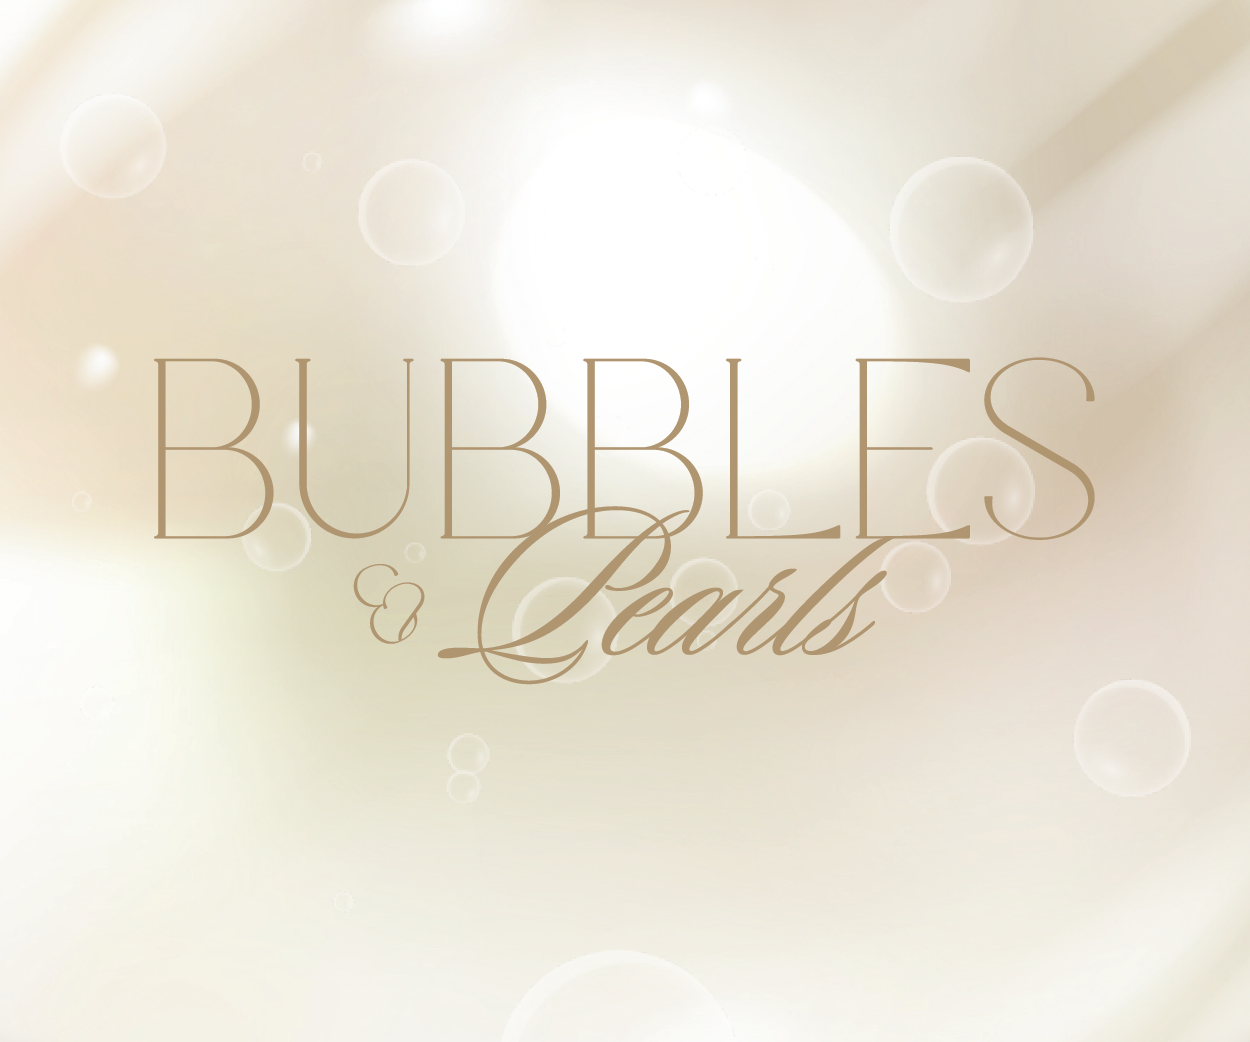 Bubbles & Pearls Vol. 2 - Champagner & Caviar Lunch by Stefan Heilemann @Widder Garden